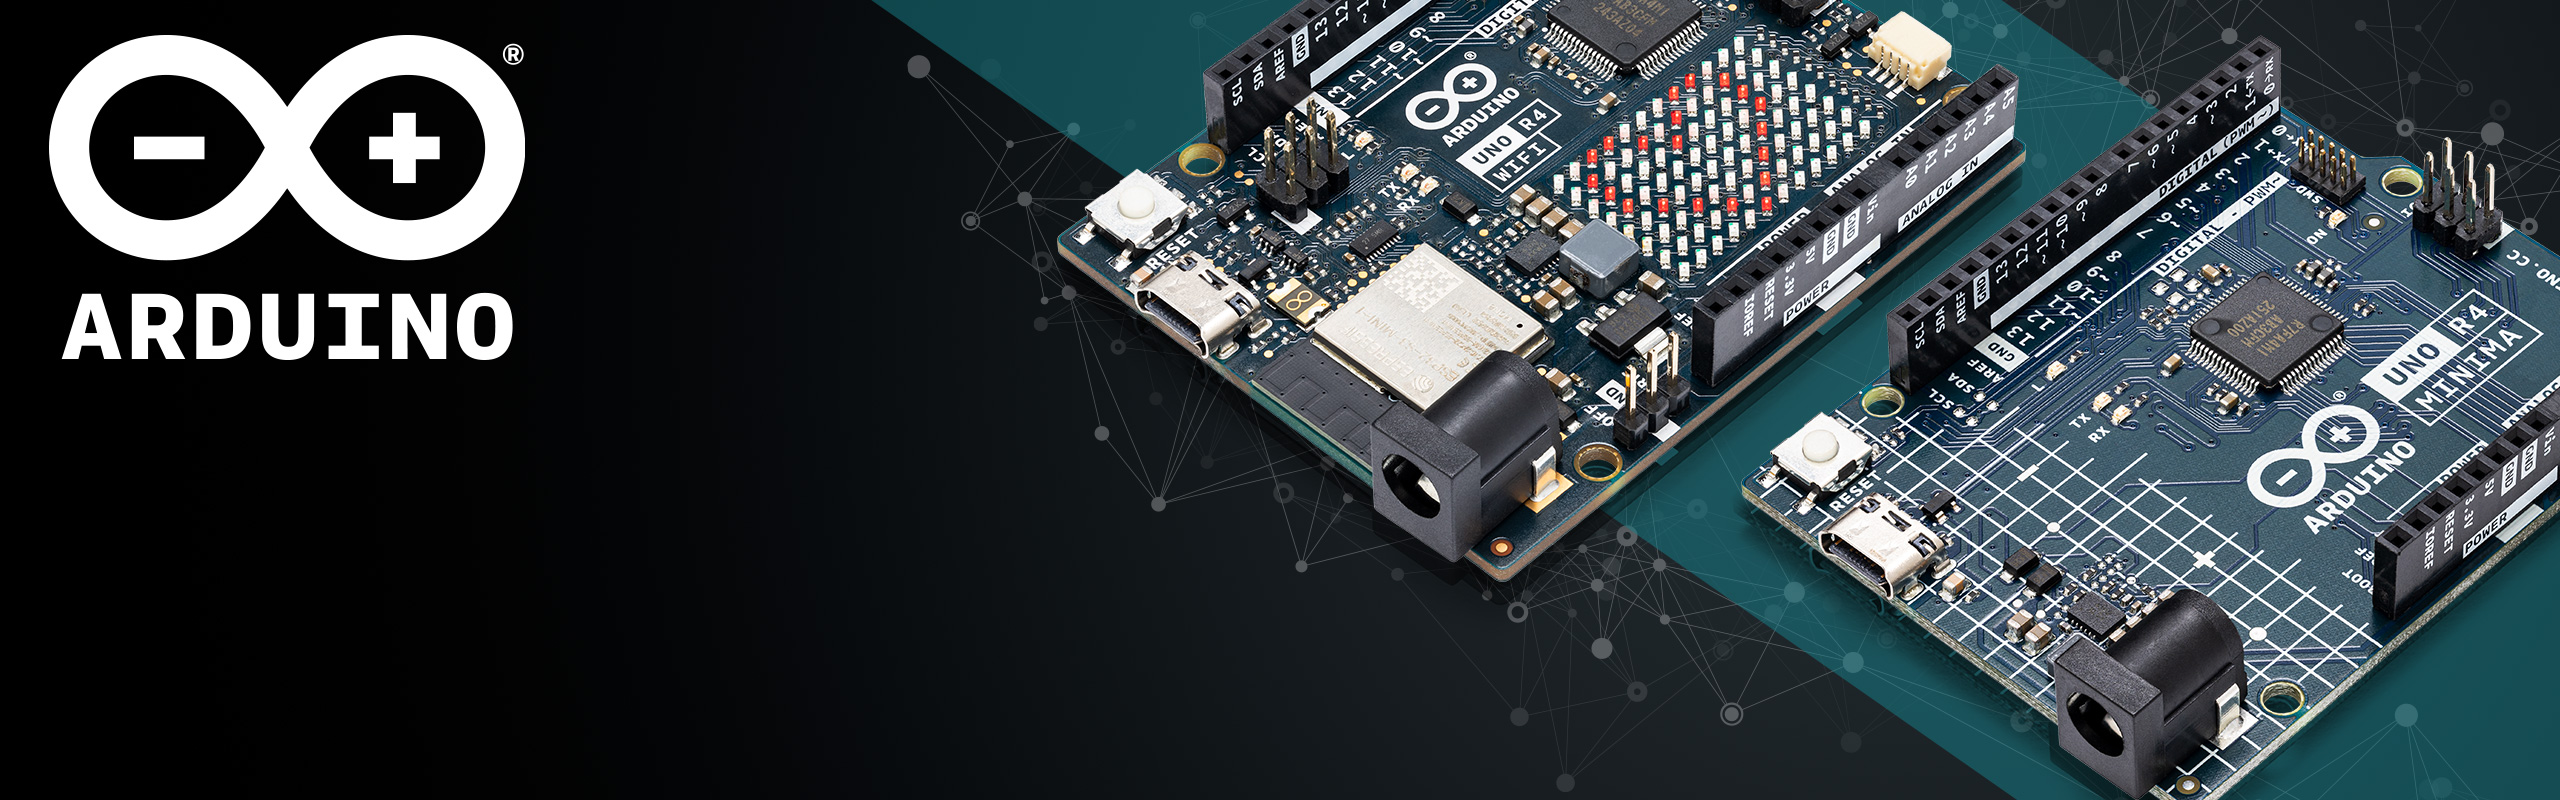 Arduino UNO R4 PCB Mastery: Designing Tomorrow's Tech